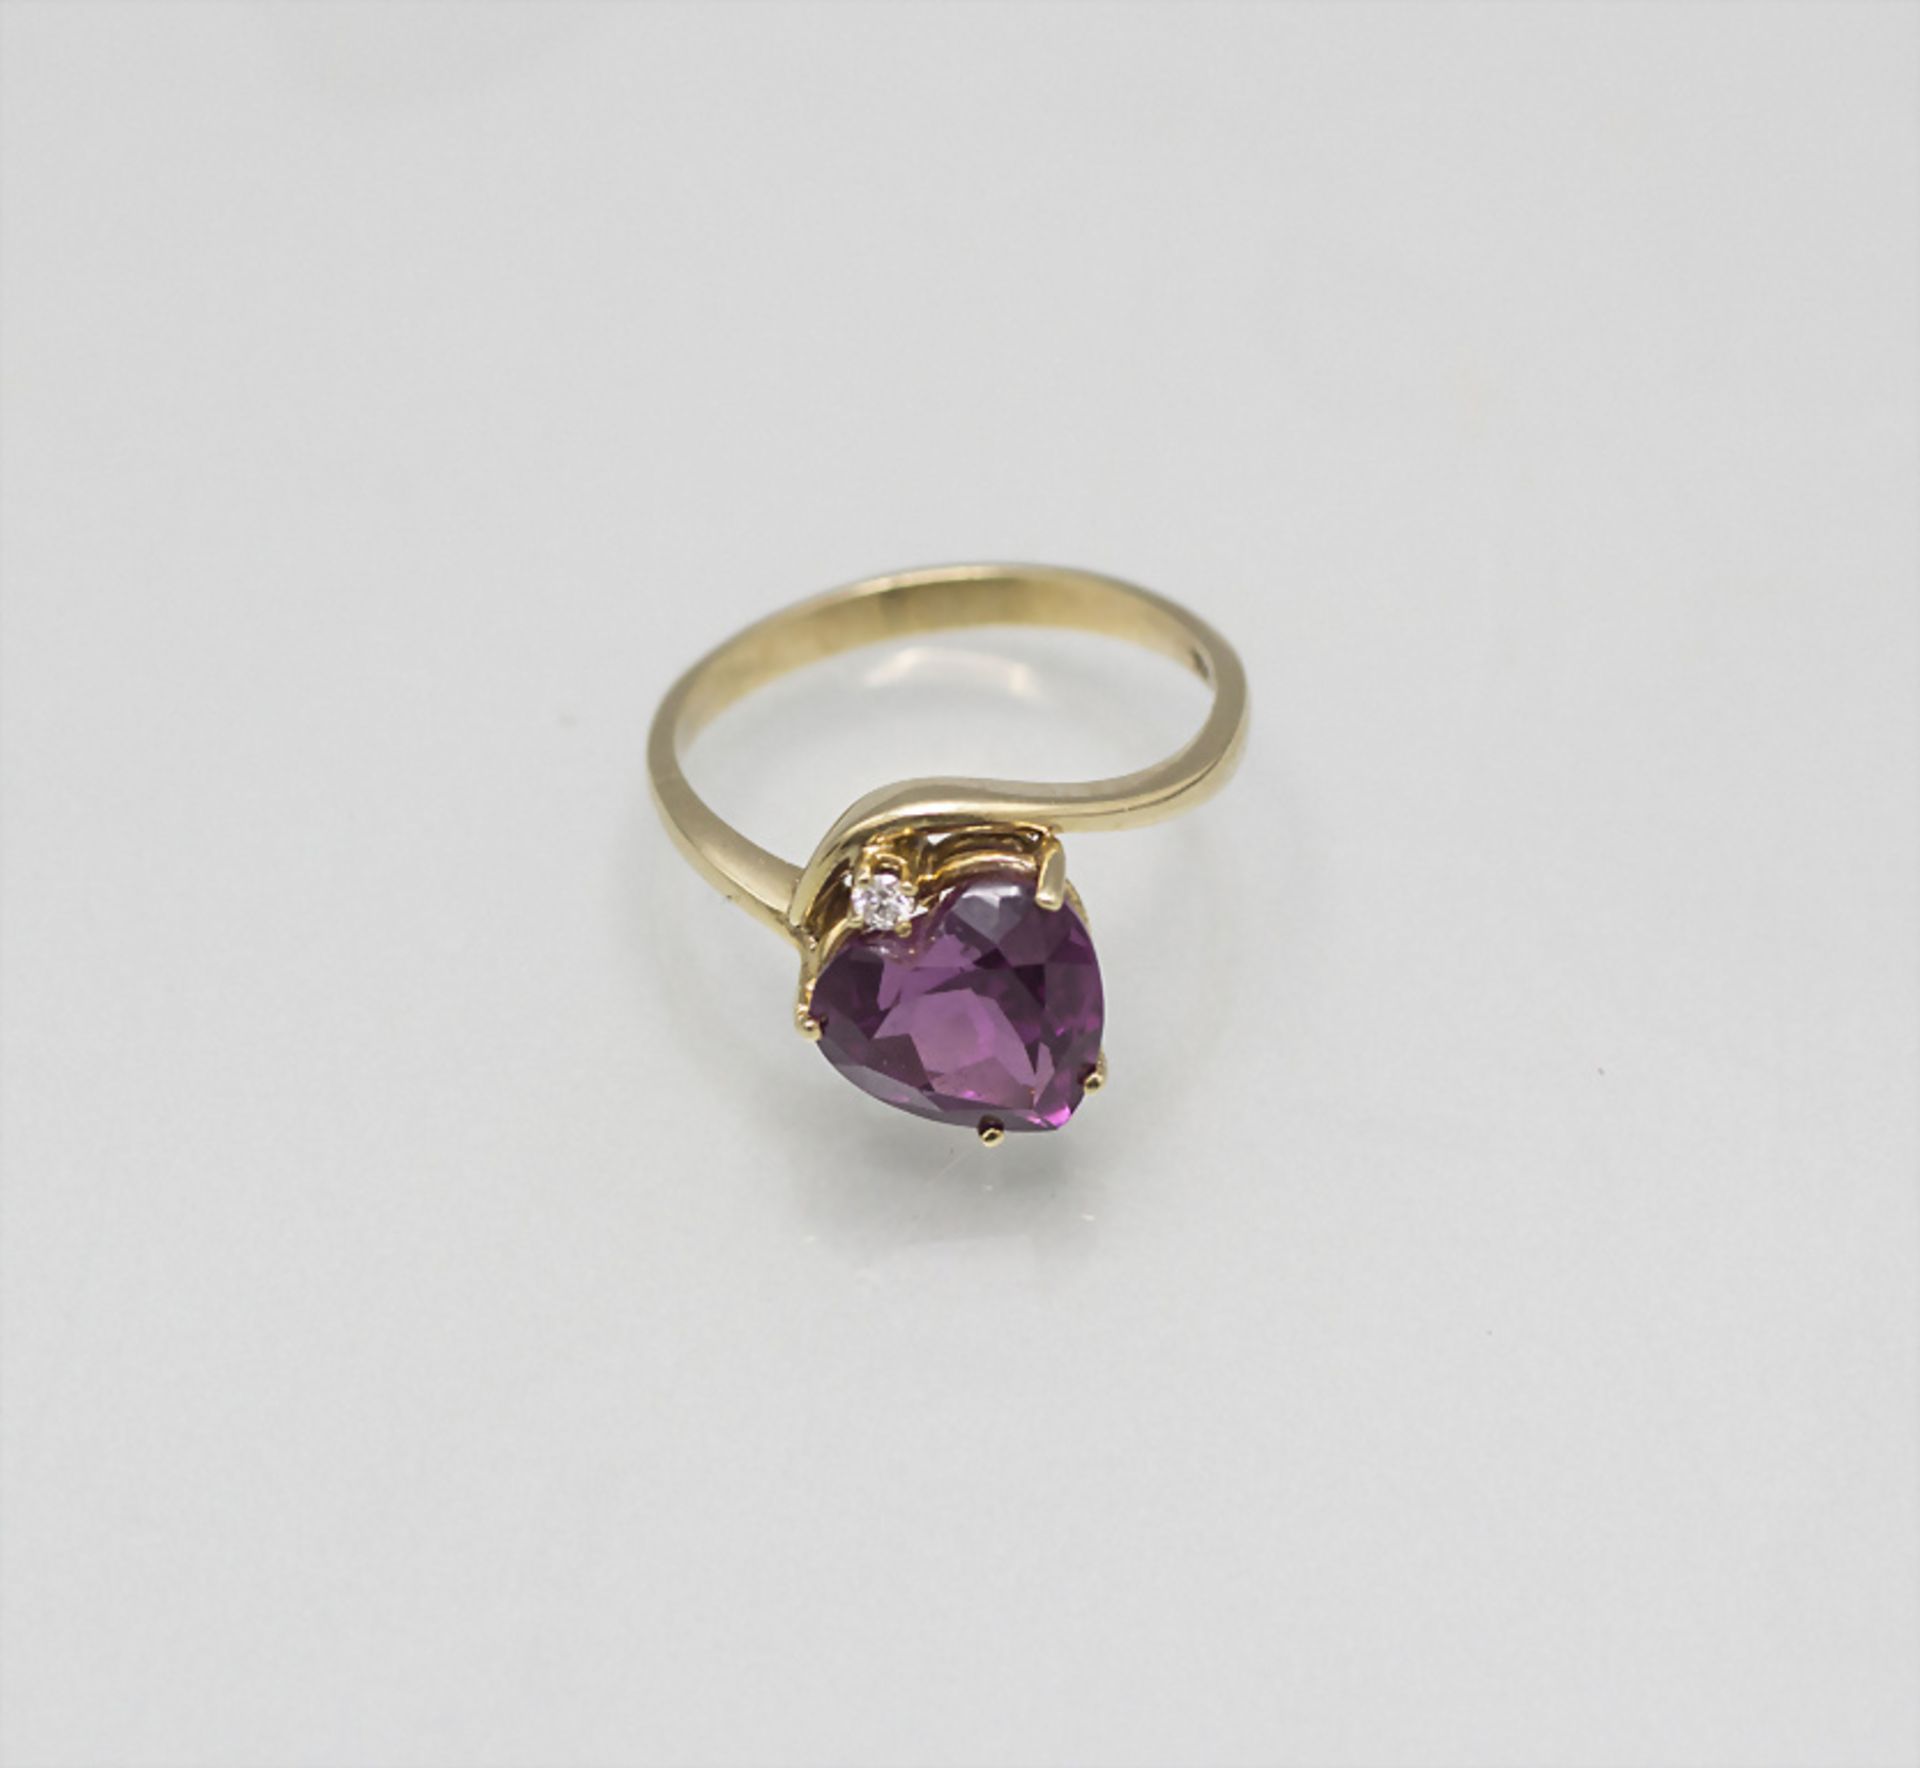 Damenring mit Amethyst / A 14 ct ladies gold ring with an amethyst - Bild 2 aus 3